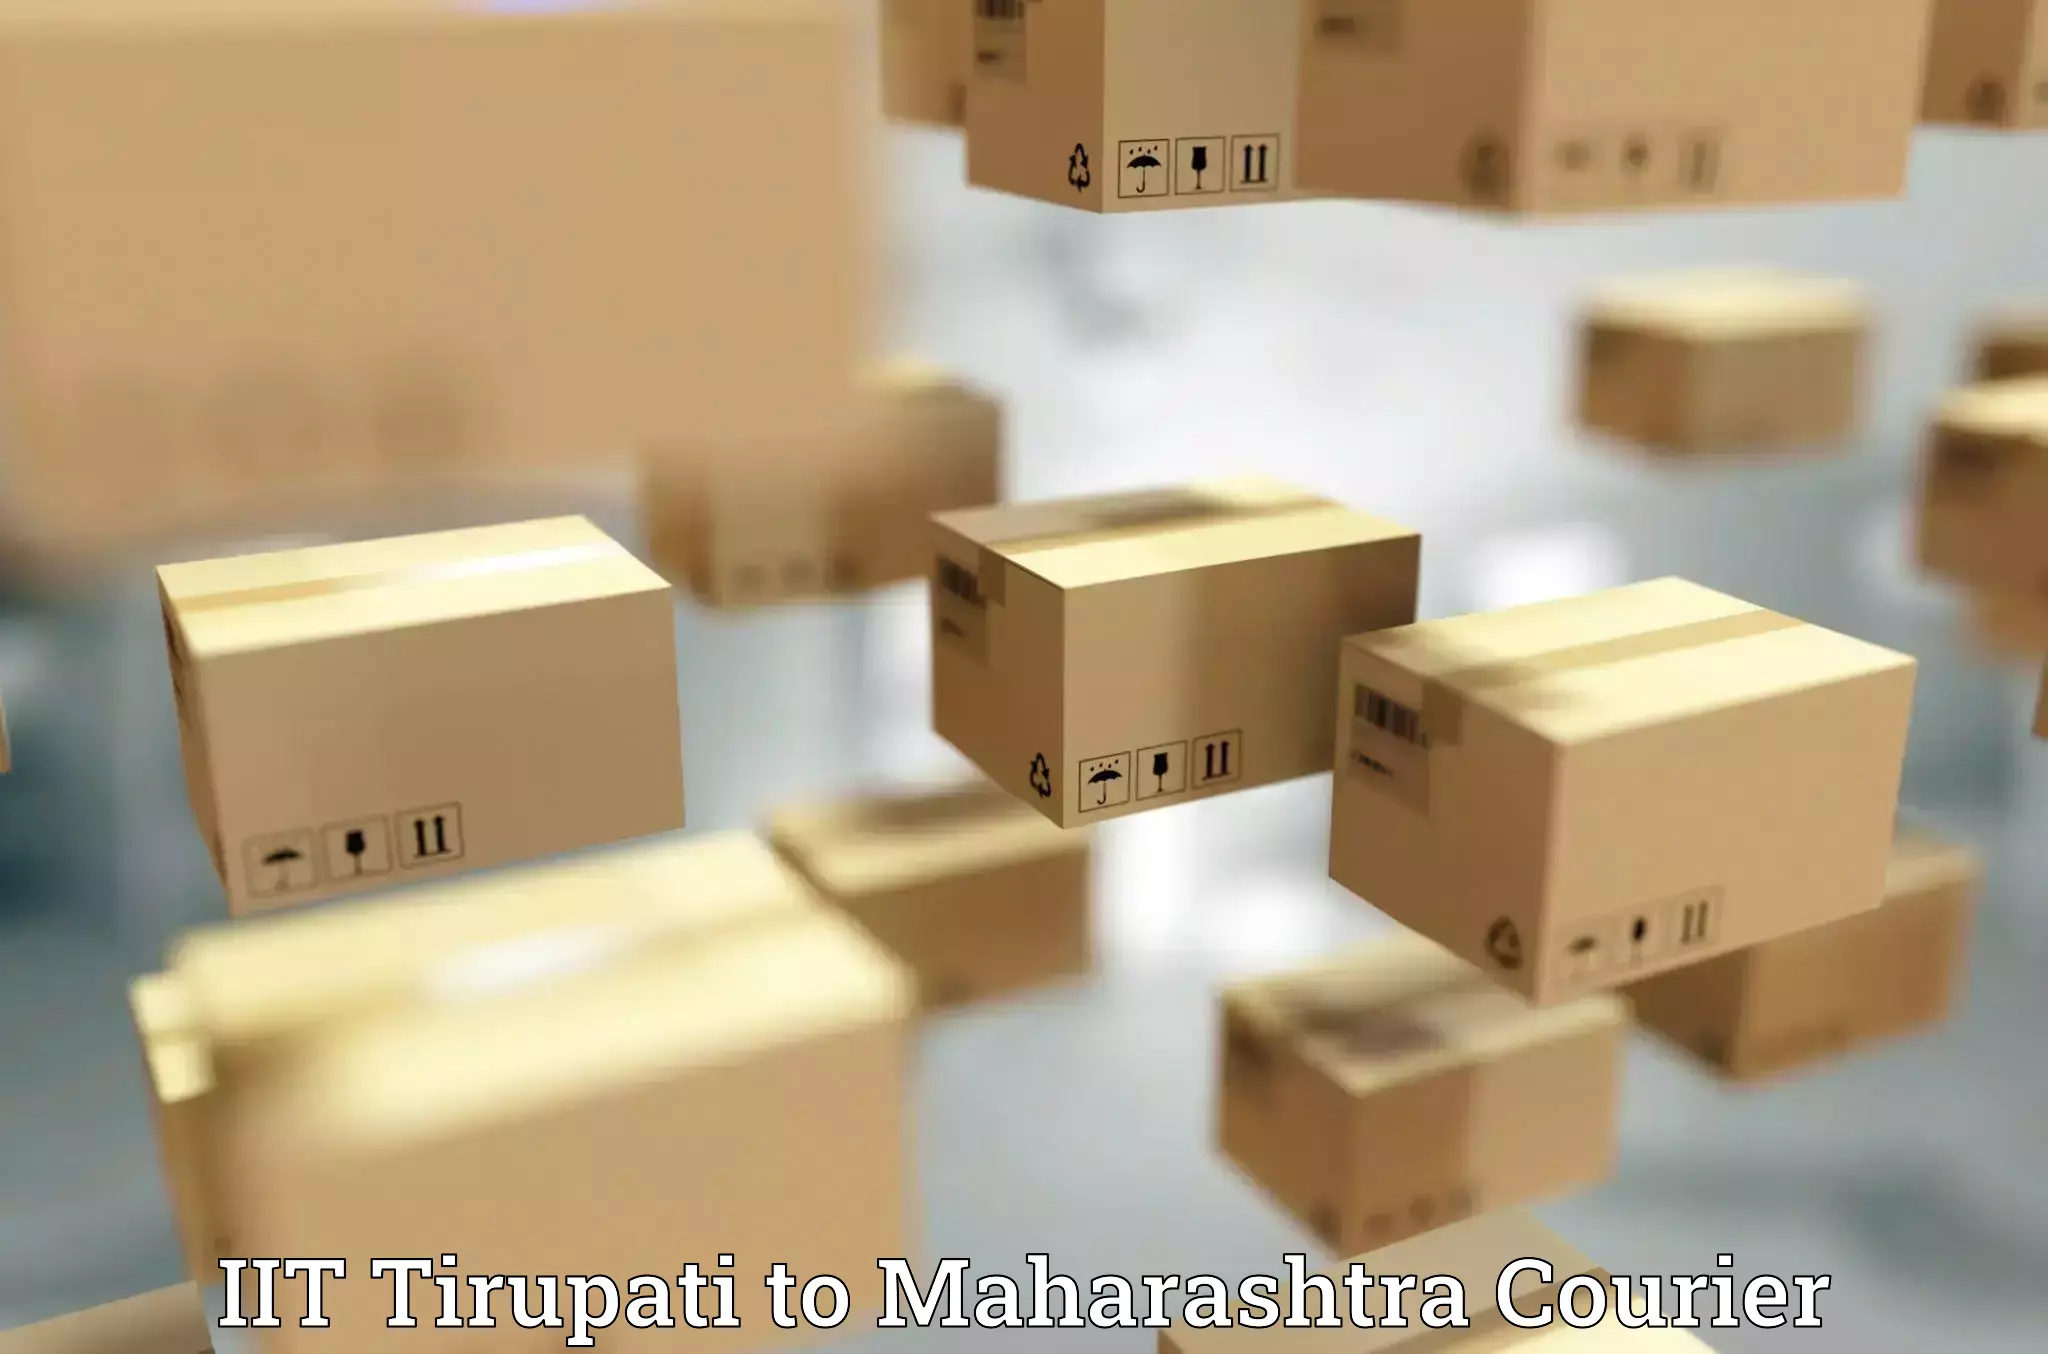 On-demand delivery in IIT Tirupati to Maharashtra